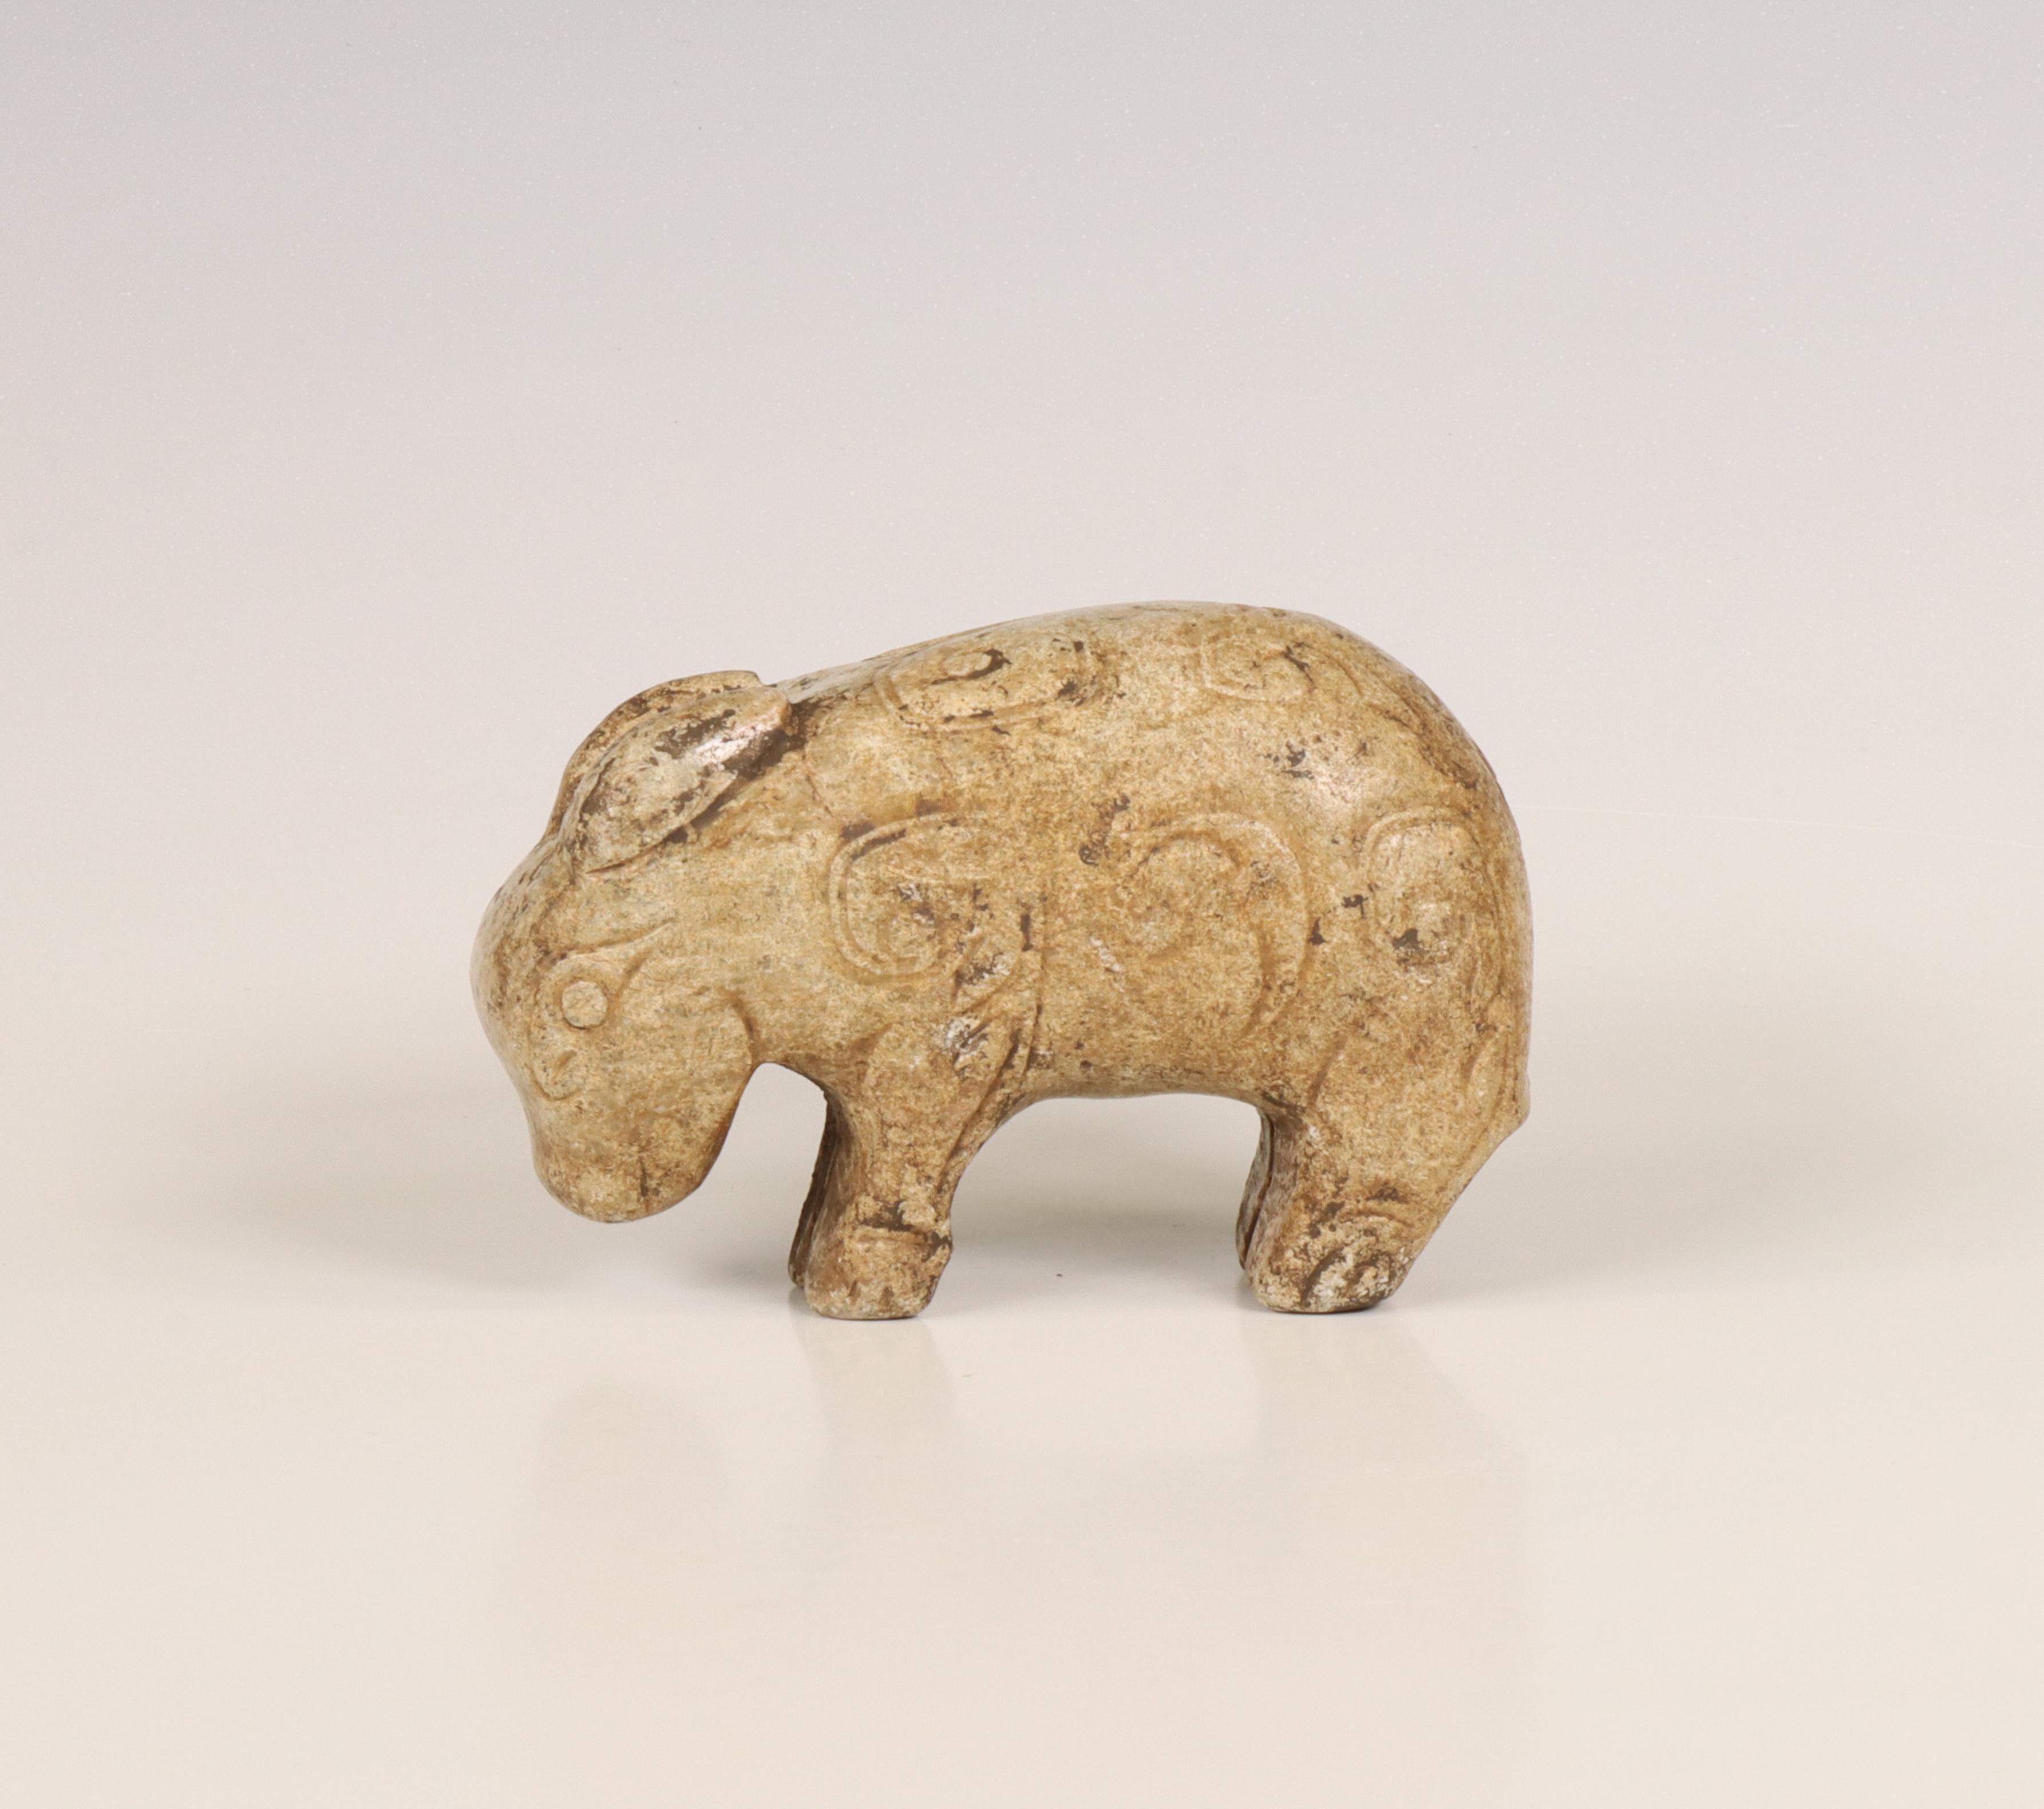 China, jade carving of a bear, possibly Shang dynasty, 11th-12th century BC, - Image 2 of 6